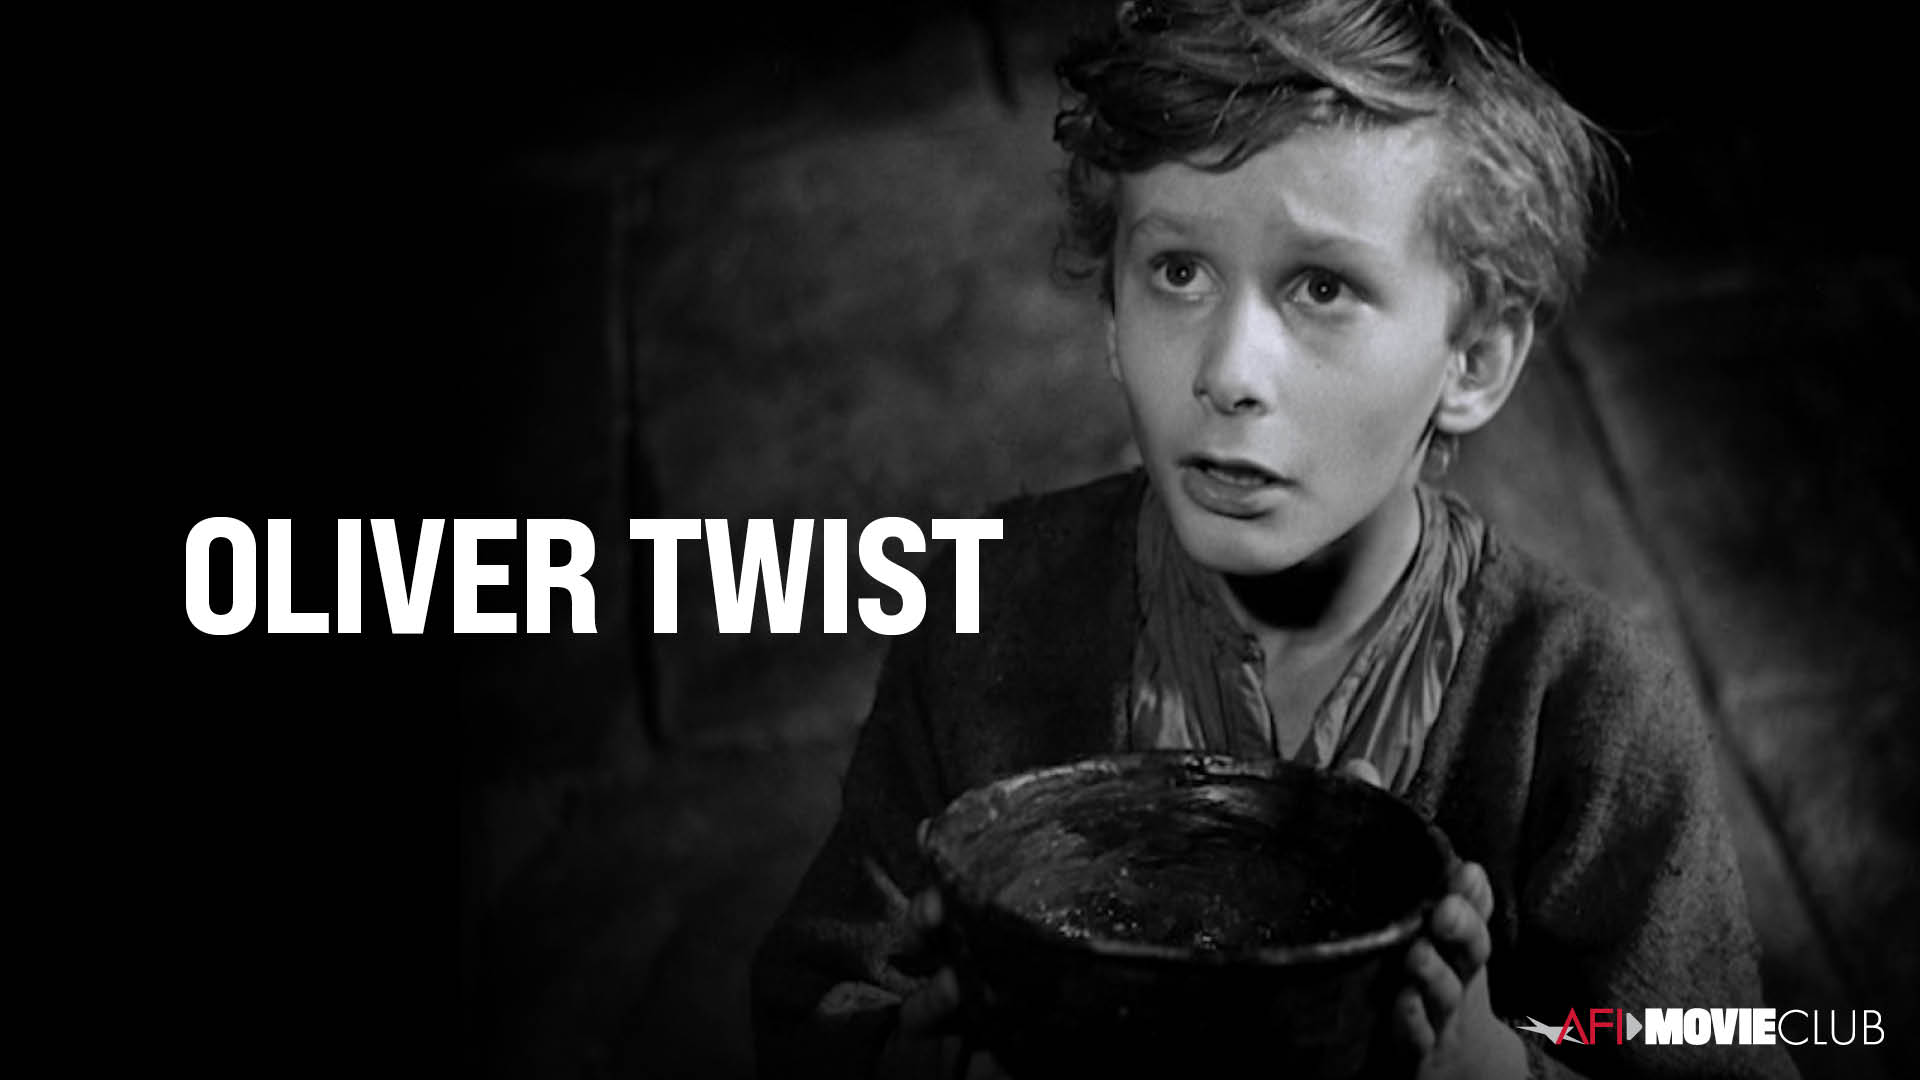 Oliver Twist Film Still - John Howard Davies